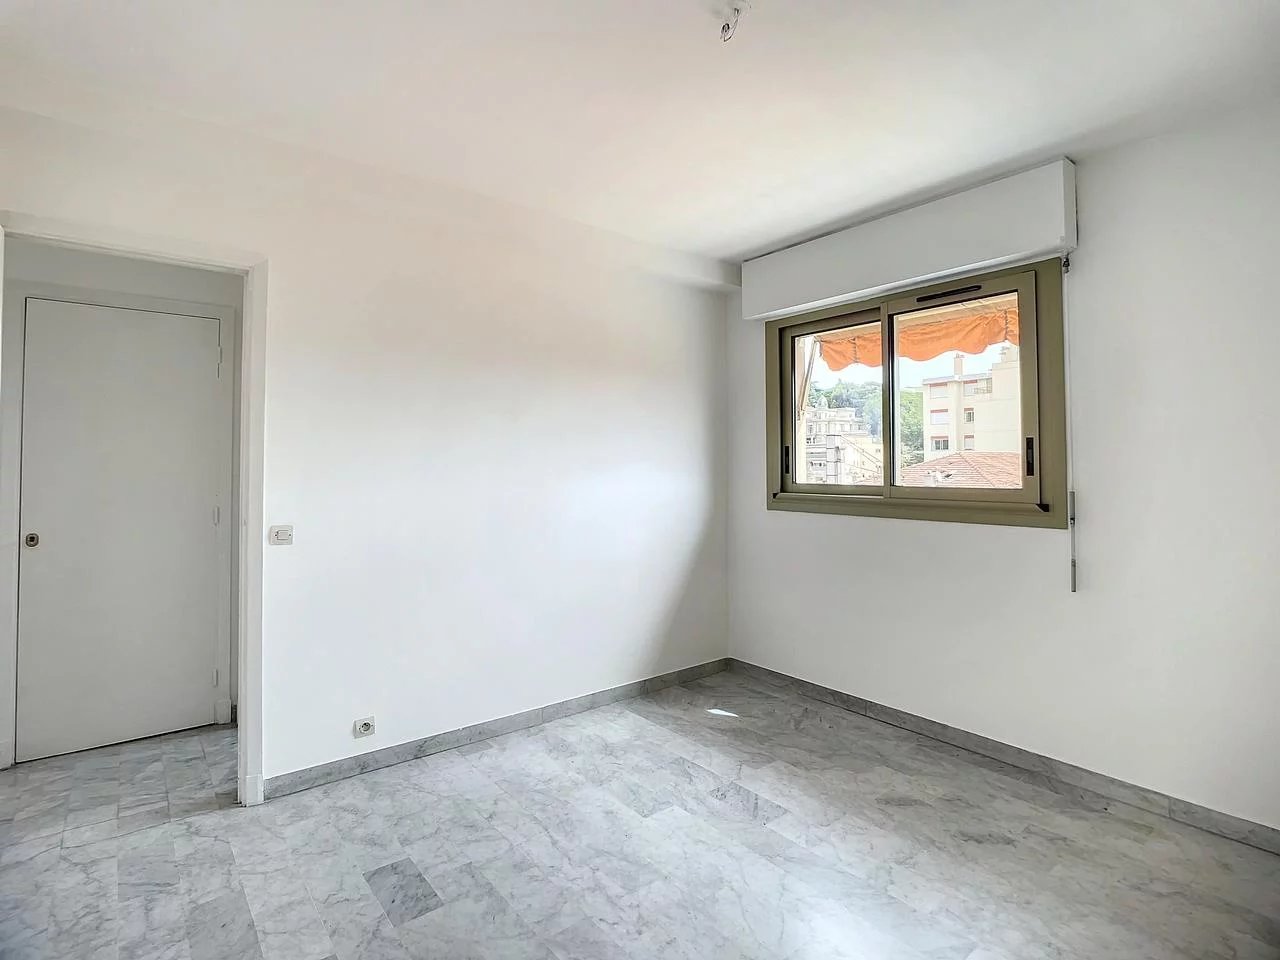 Appartement  2 Locali 43.6m2  In vendita   220 000 €